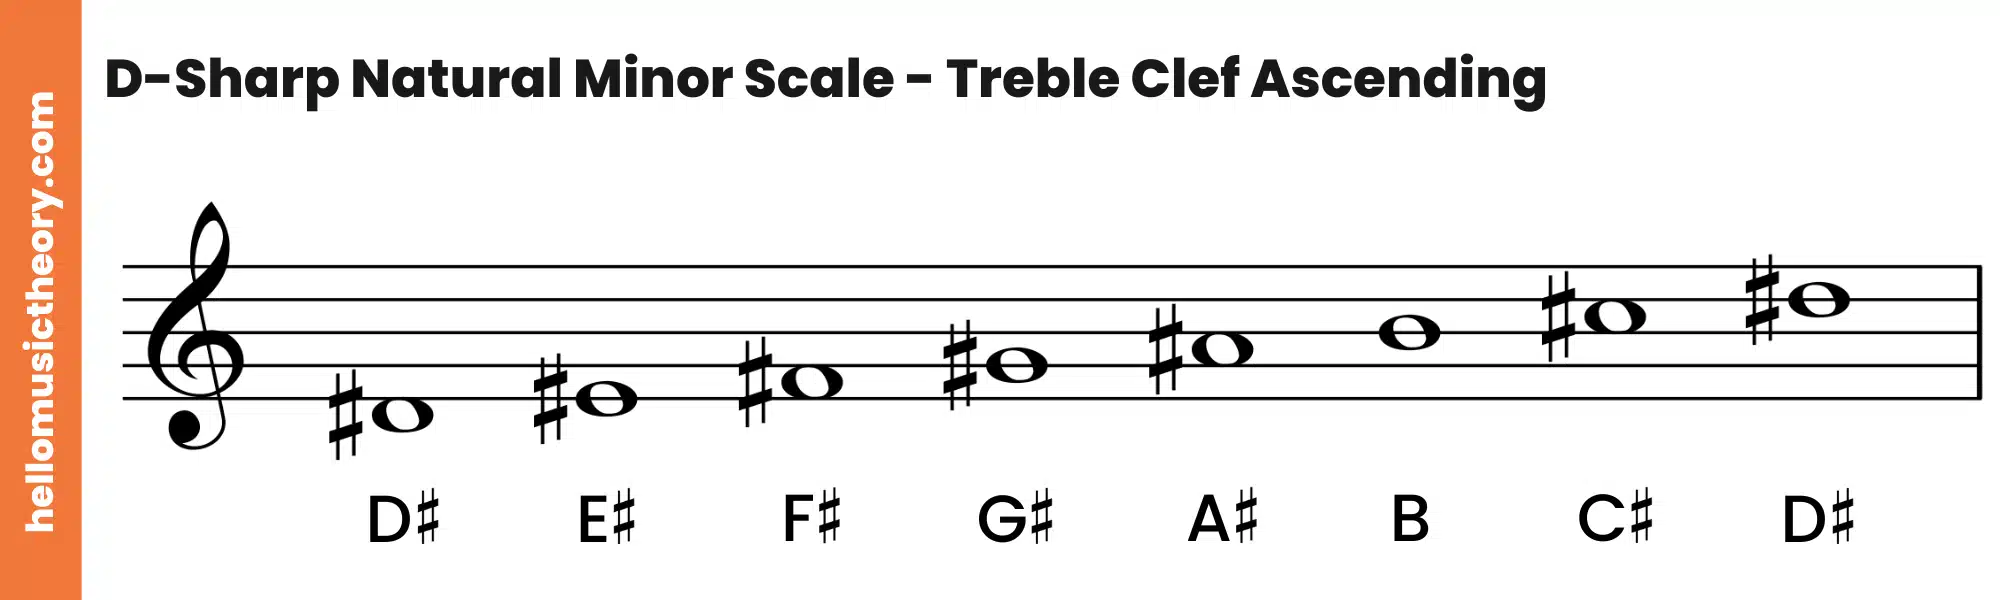 D-Sharp-Natural-Minor-Scale-Treble-Clef-Ascending